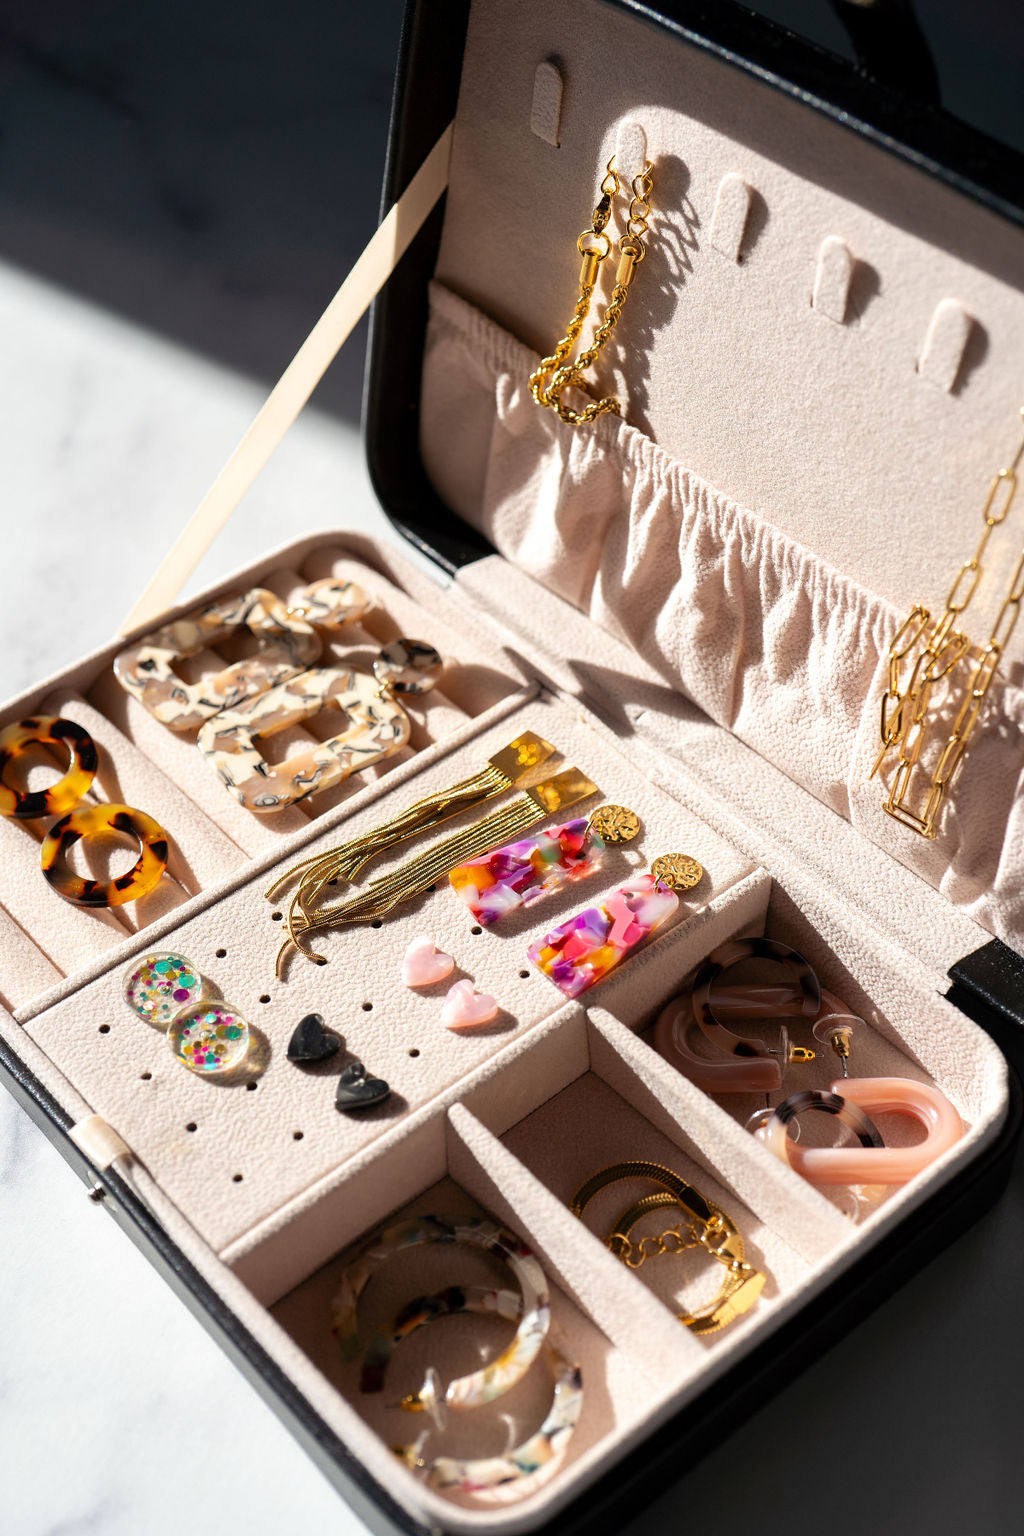 Jewelry Travel Case Box - Black by Spiffy & Splendid